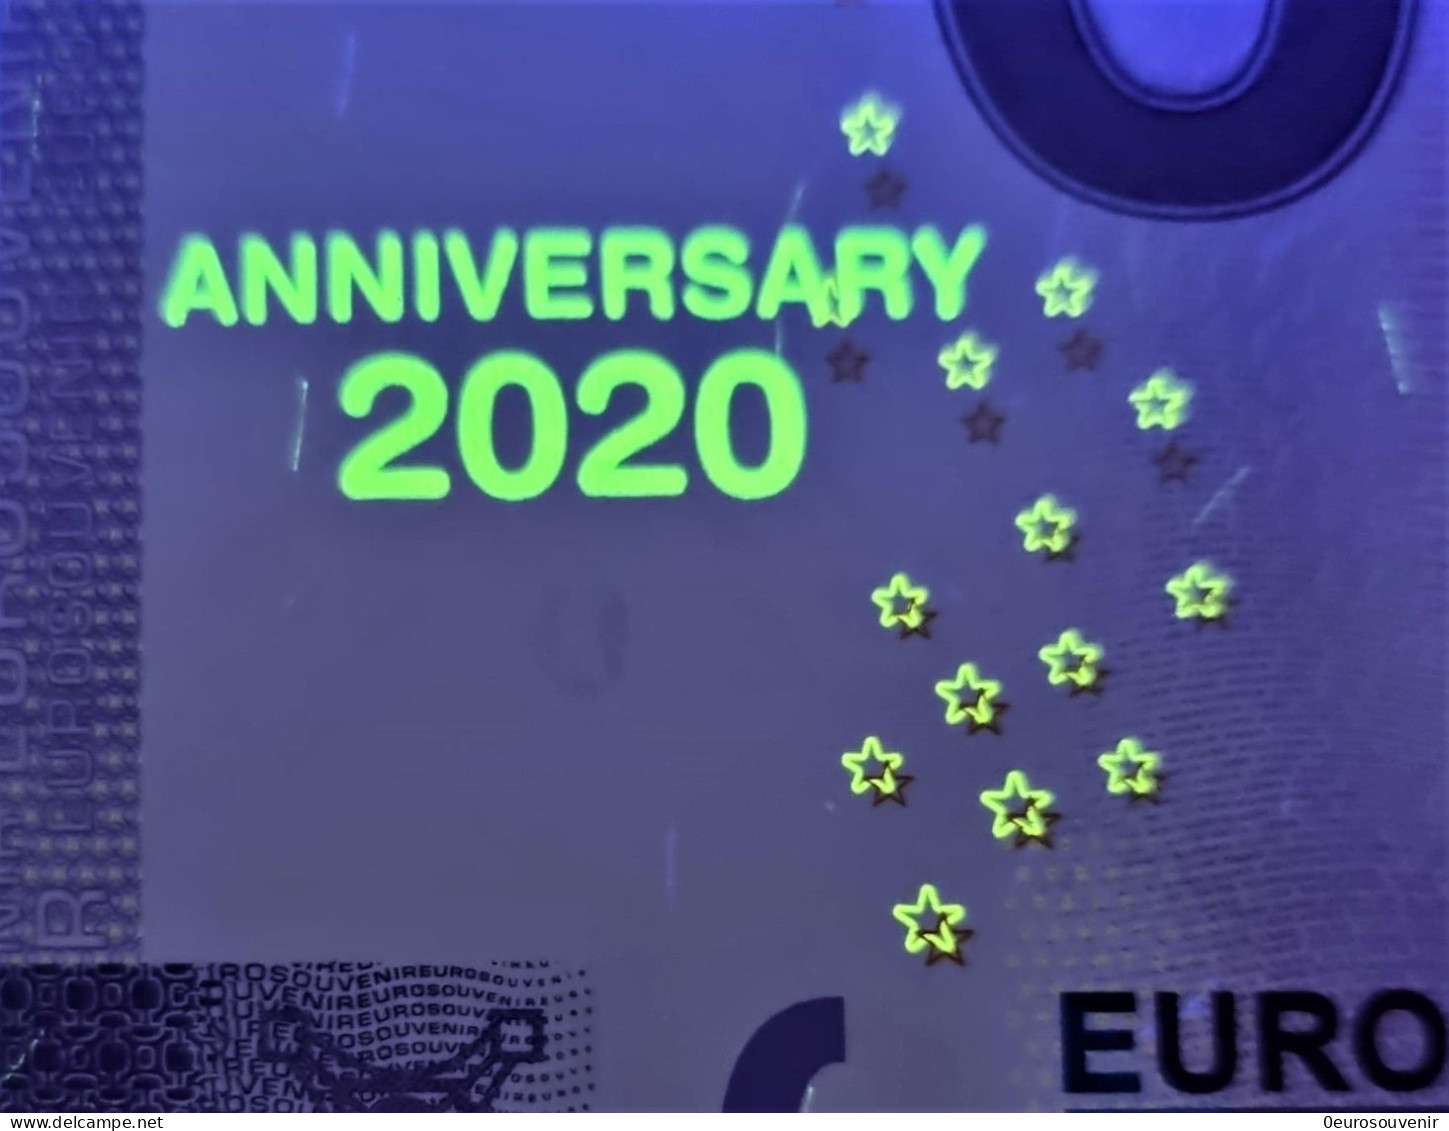 0-Euro XEAW 2020-6 TECHNIK MUSEUM SINSHEIM - THE BLUE FLAME Set NORMAL+ANNIVERSARY - Privatentwürfe